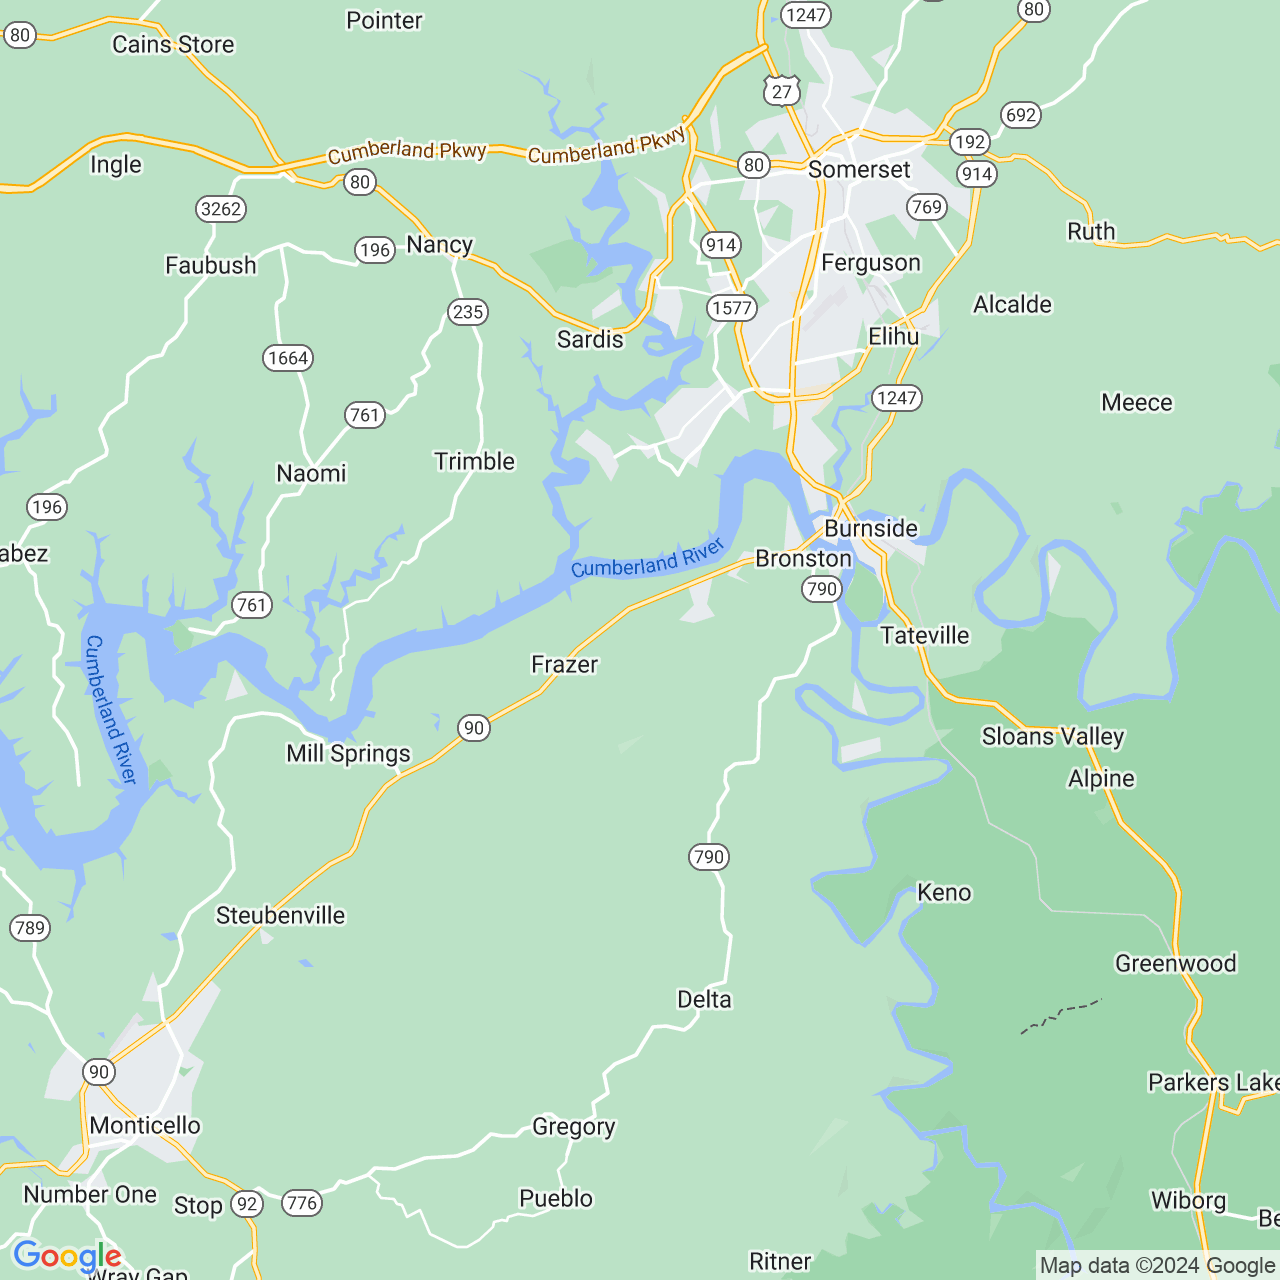 Google Maps Static Image